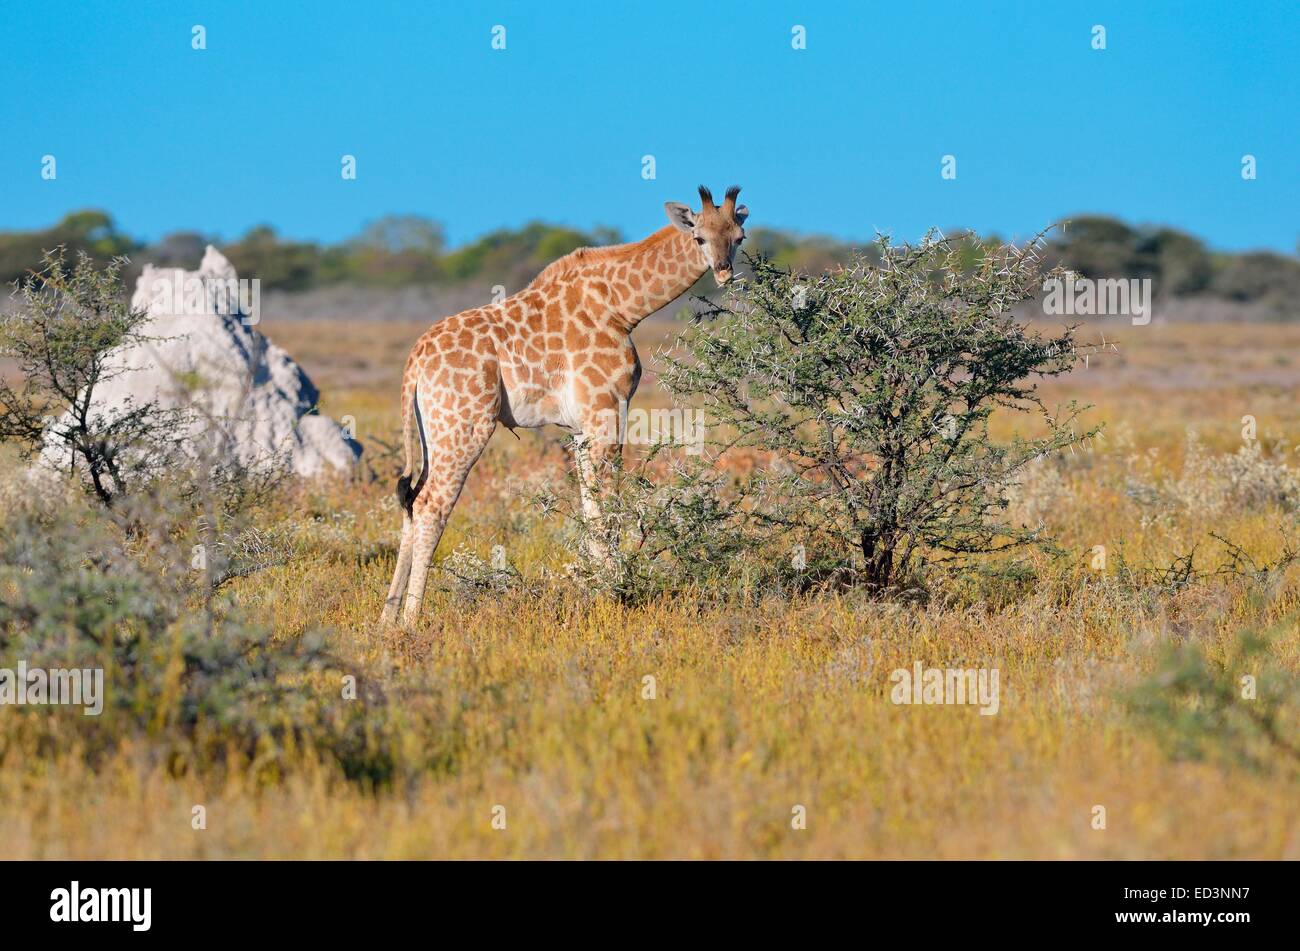 Baby giraffe (Giraffa camelopardalis), feeding on leaves and thorns, Etosha National Park, Namibia, Africa Stock Photo